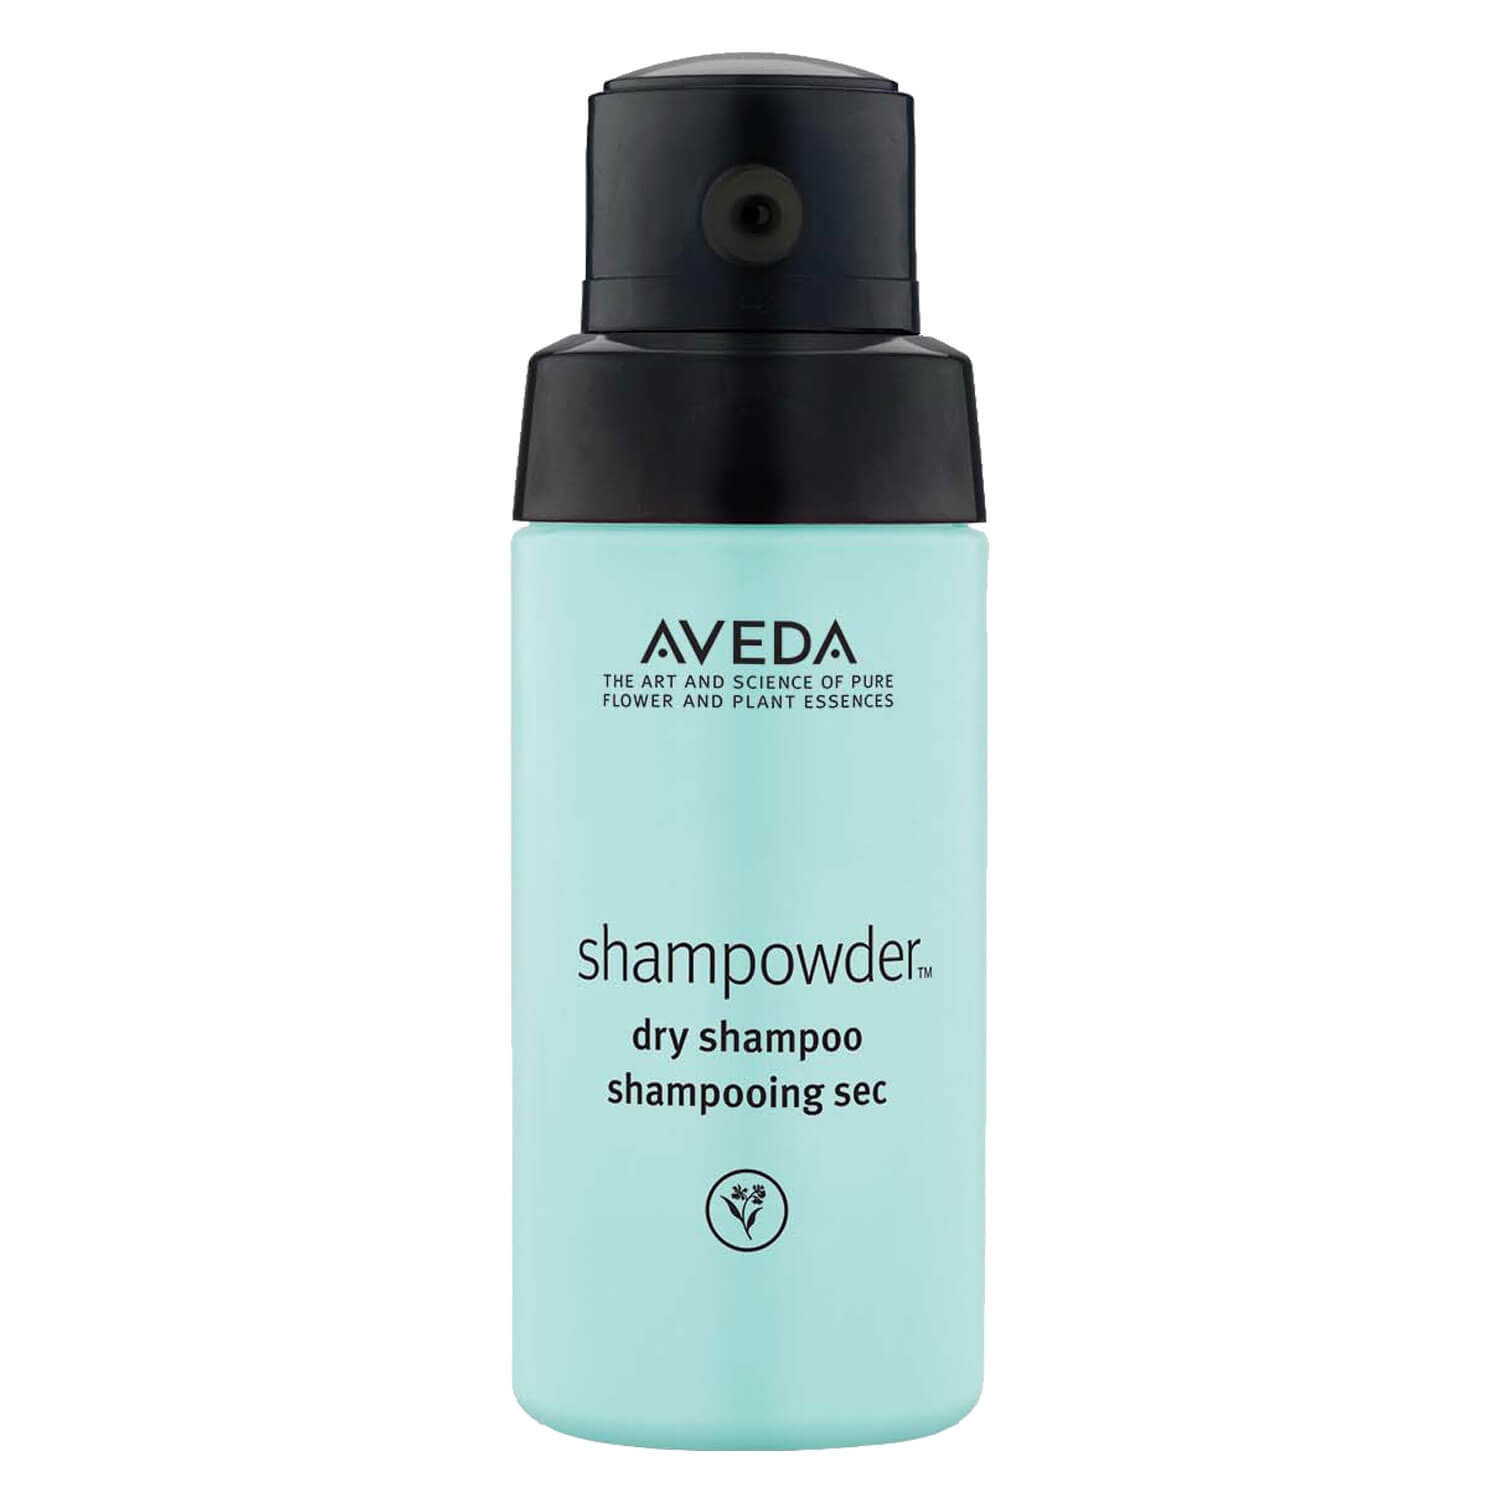 Product image from shampure - shampowder dry shampoo